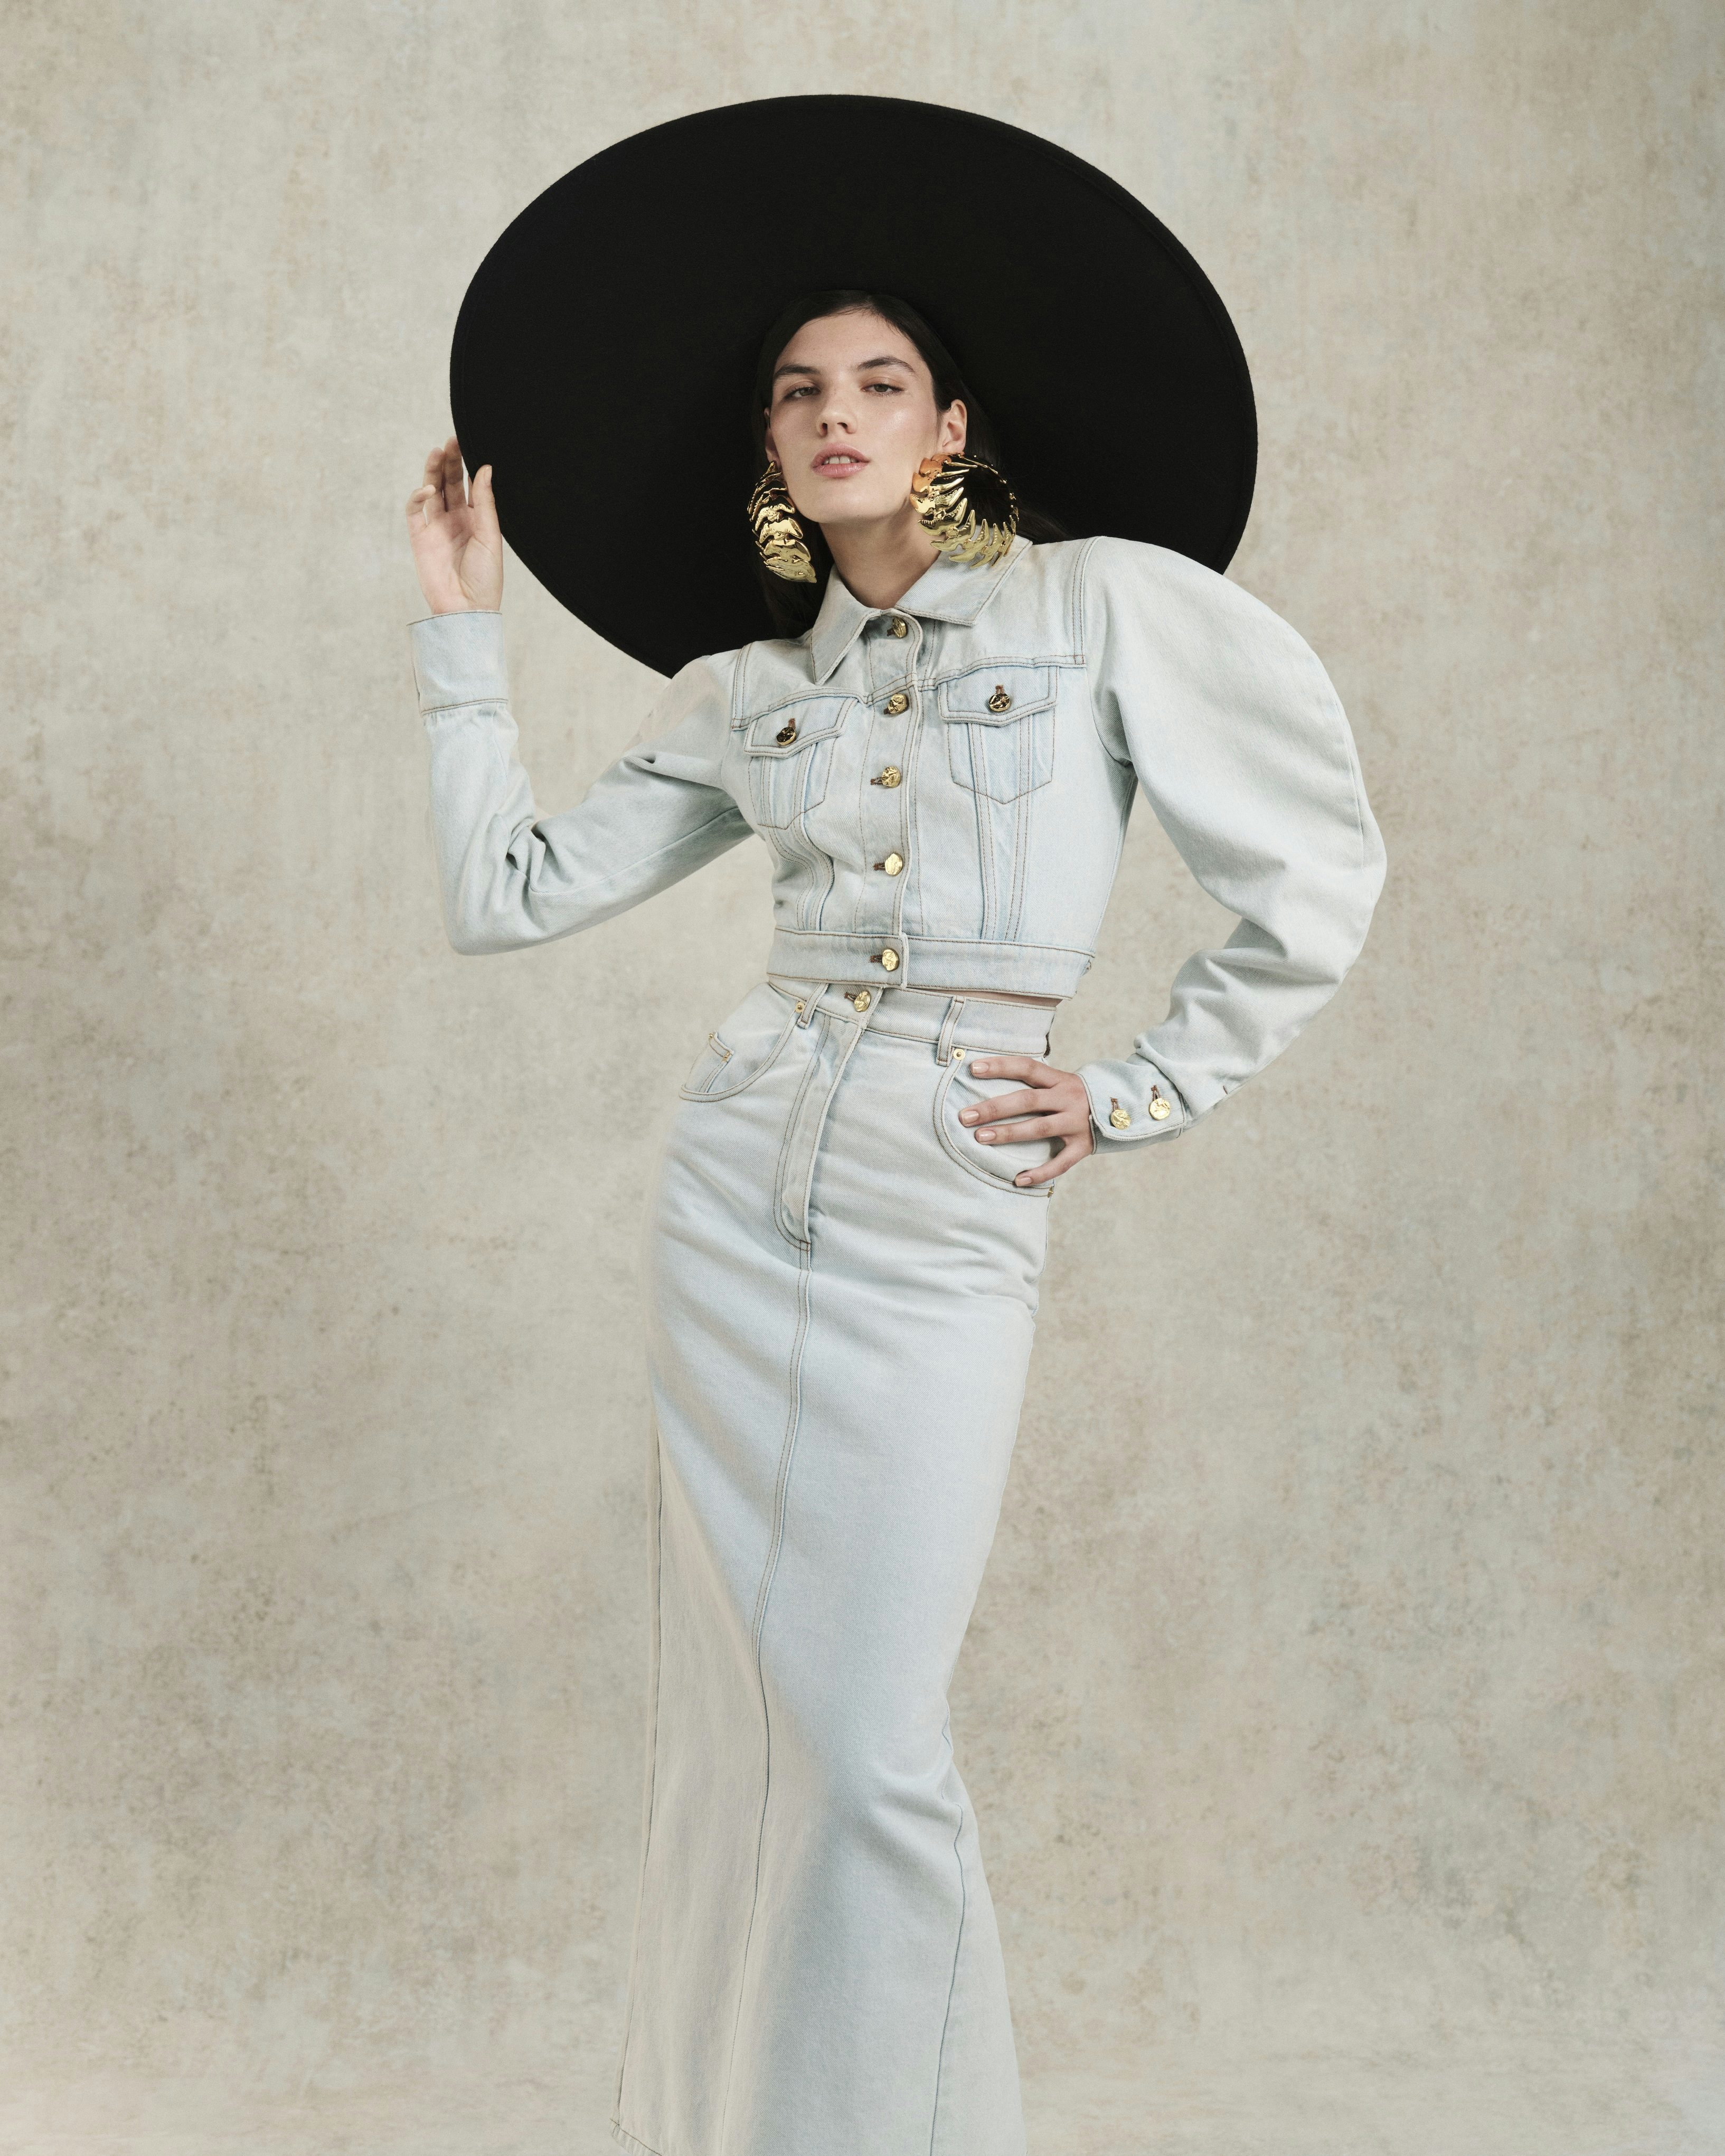 Nina Ricci Fashion and Fragrances - Official website